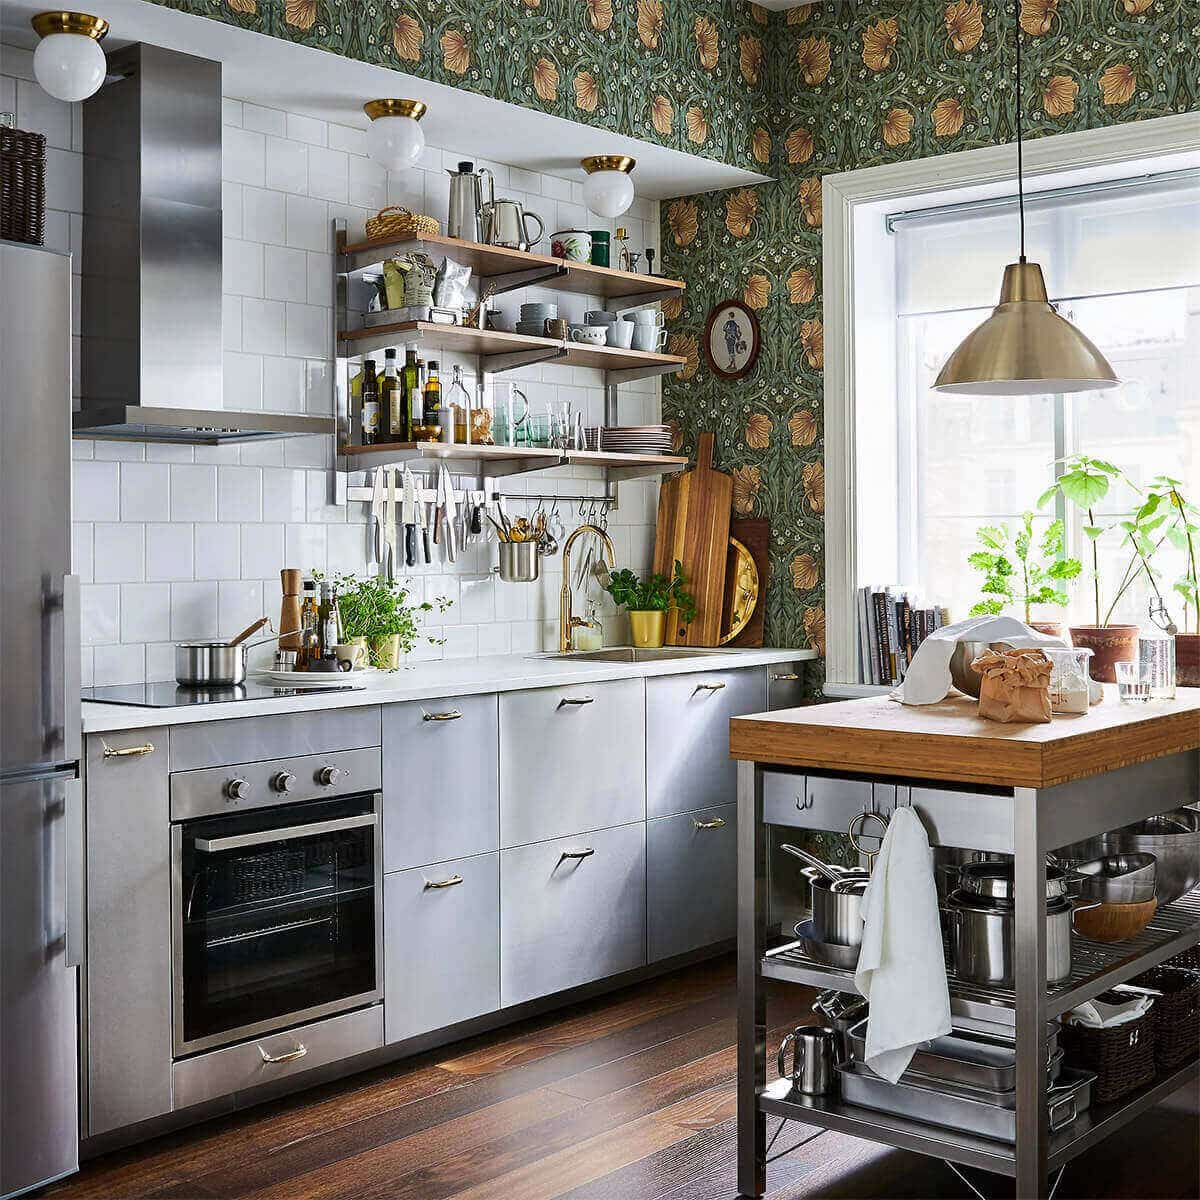 small kitchen design for small home